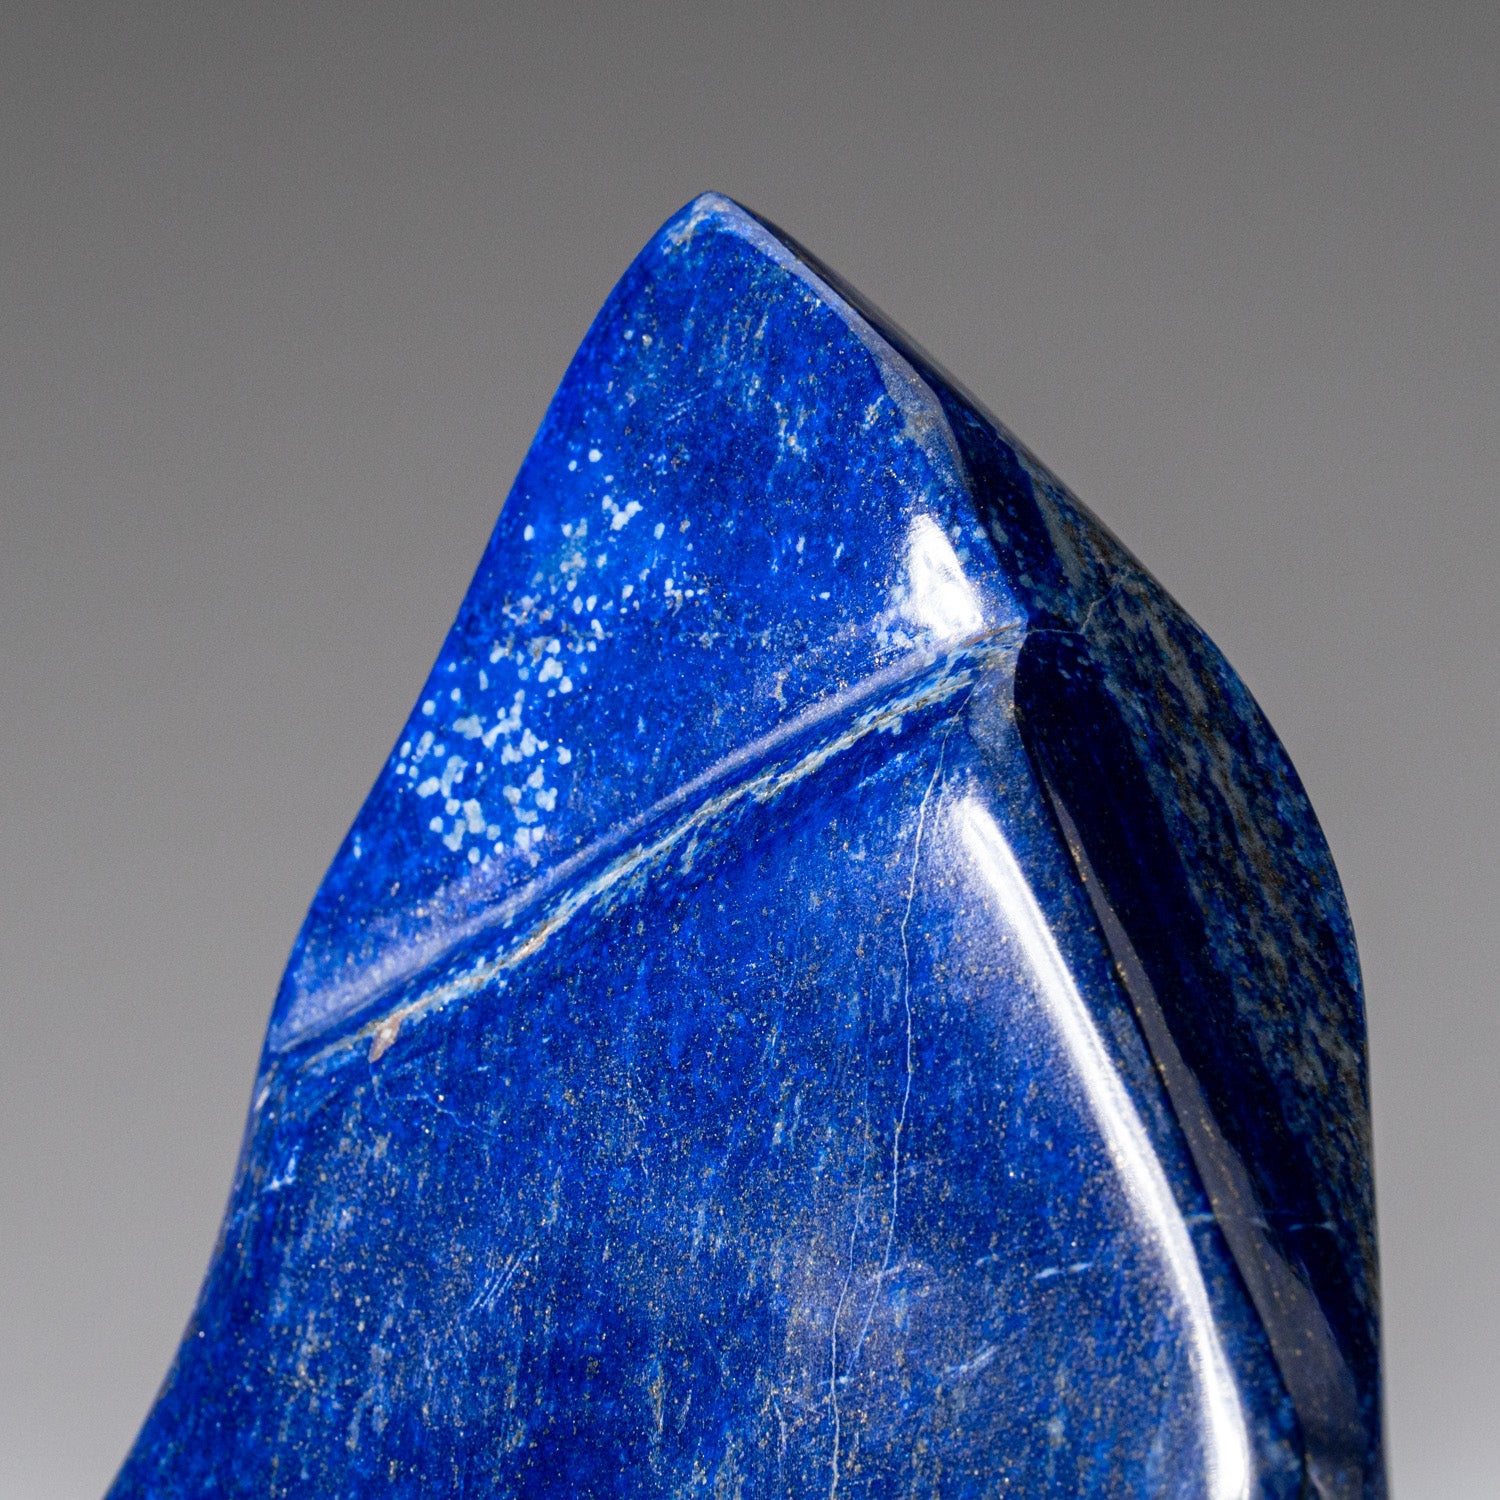 Polished Lapis Lazuli Freeform from Afghanistan (1.5 lbs)